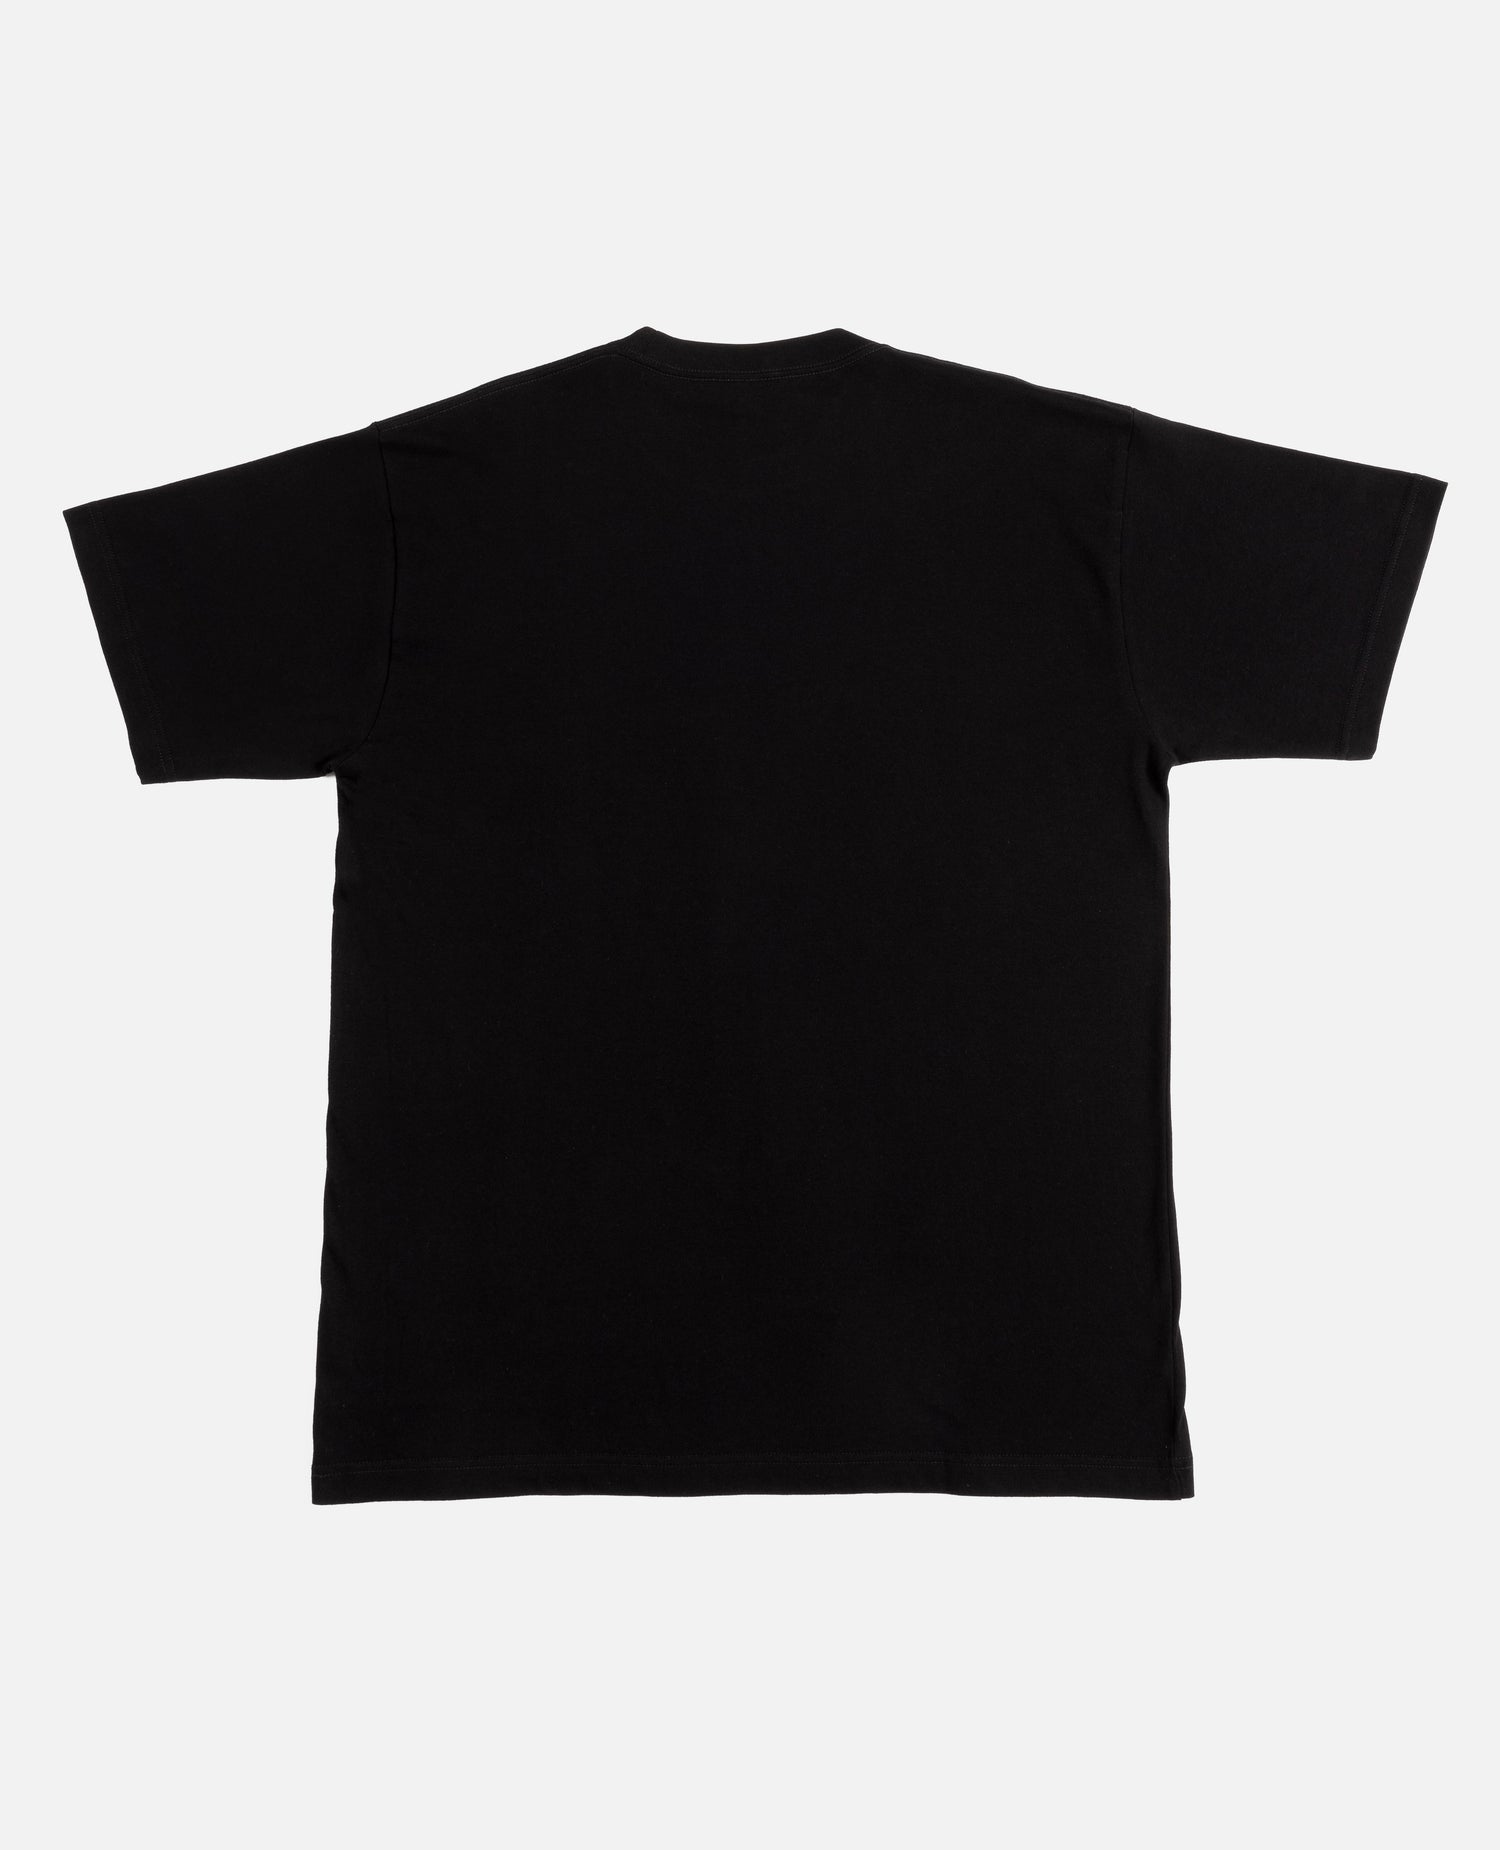 Patta x Andy Wahloo (Hassan Hajjaj) Hamsa Hand T-Shirt (Black)